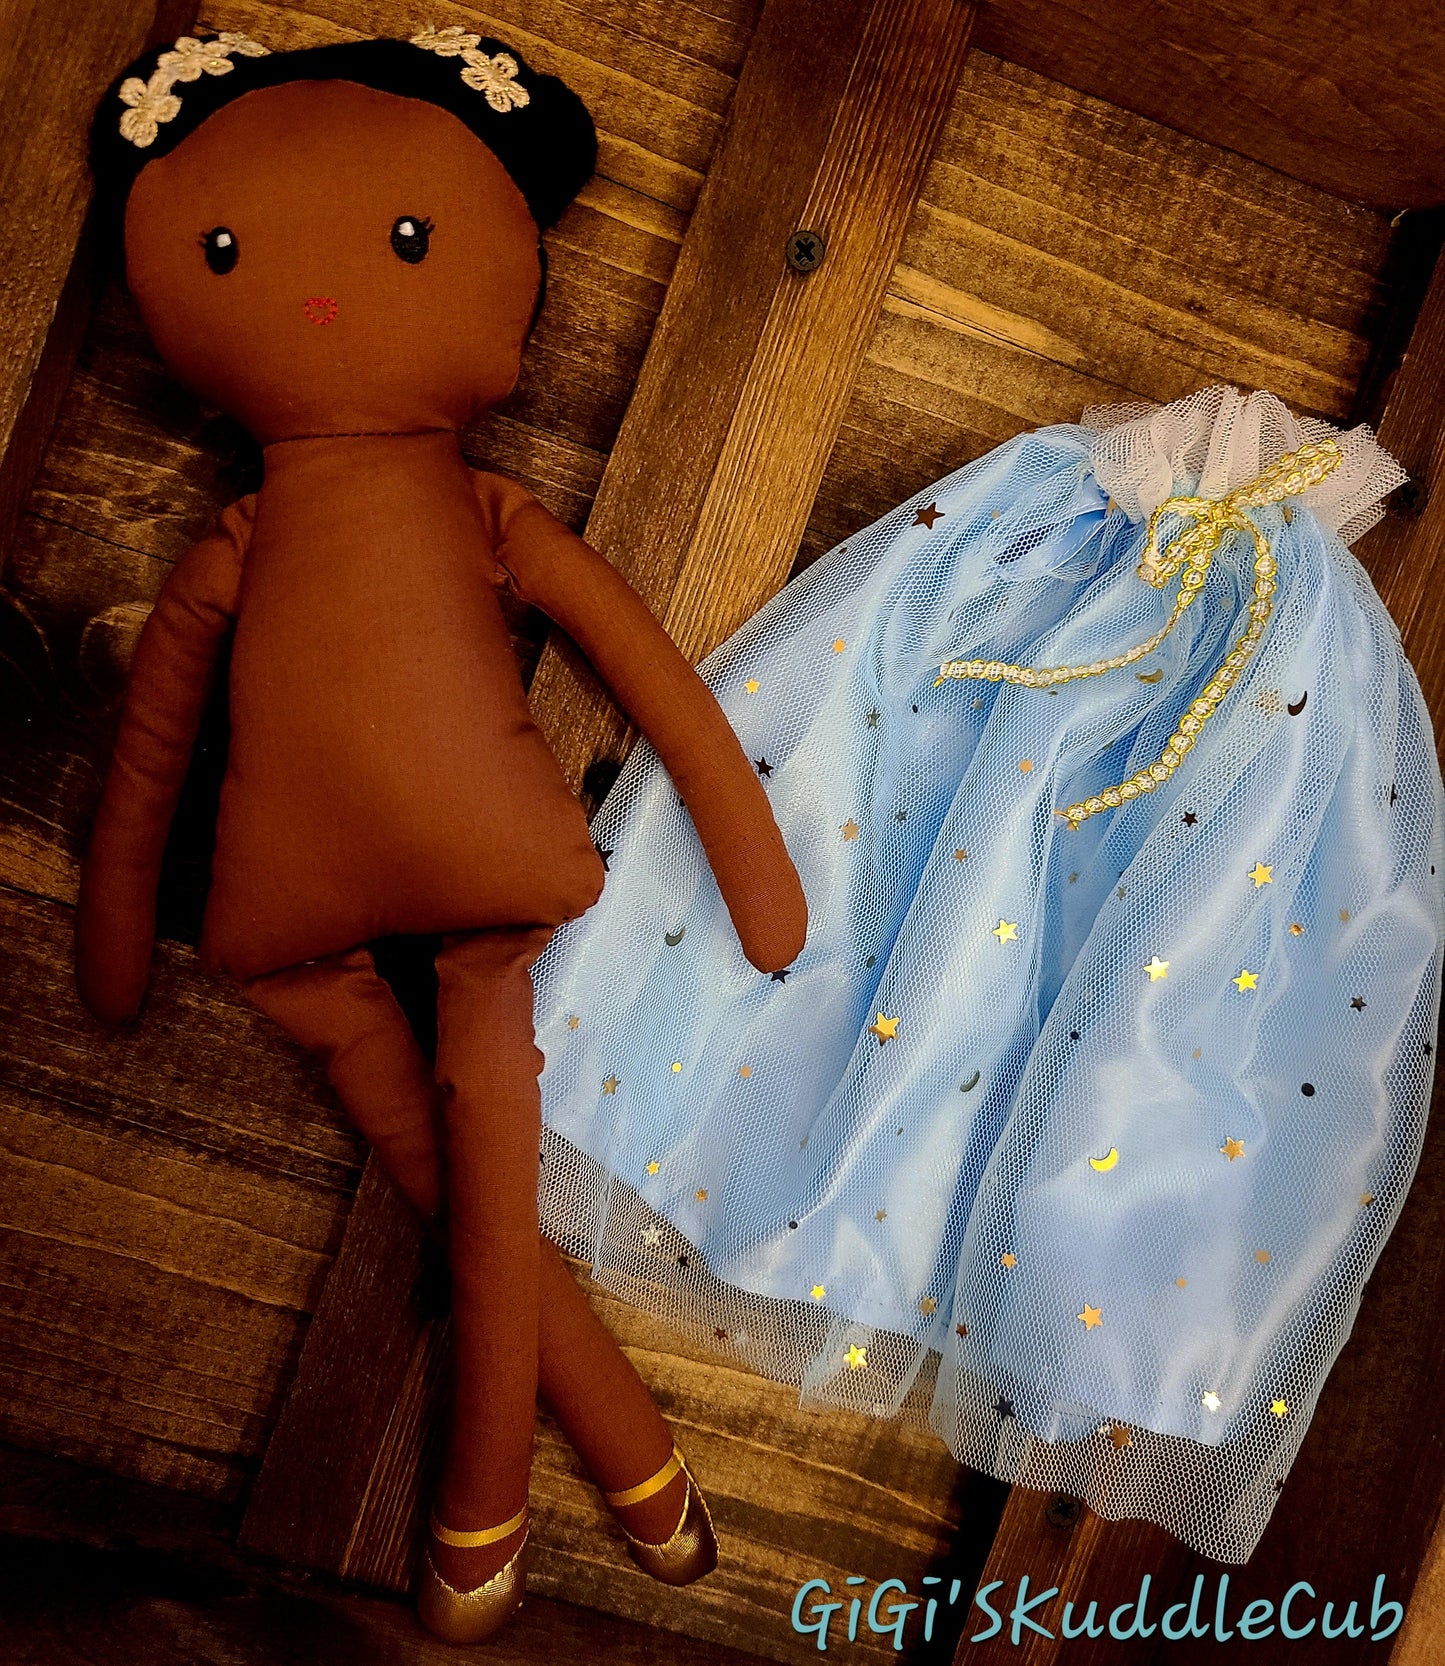 Personalized Soft Rag 13in Brown Skin Baby Girl Ballerina Dressing Dolls Plush Toy/ Decorative Plush Doll/ Handmade Baby Gift Toy